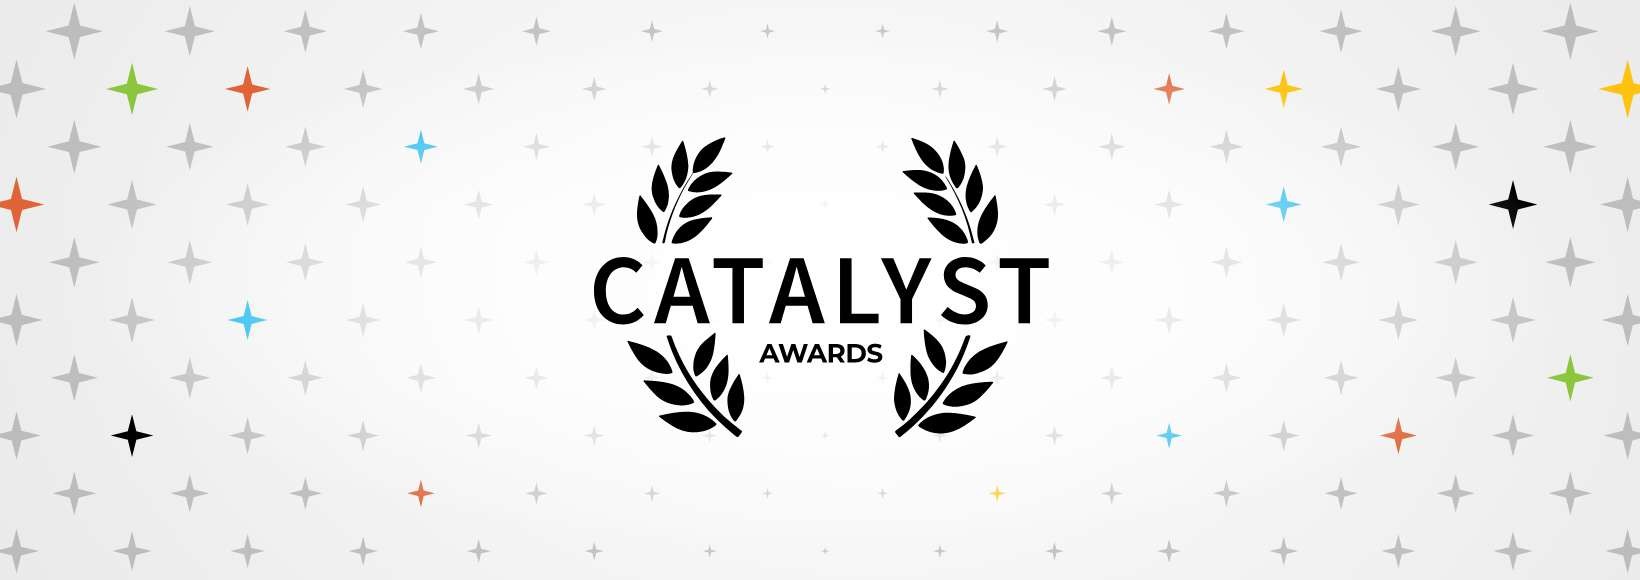 Catalyst Awards logo over a stylized background